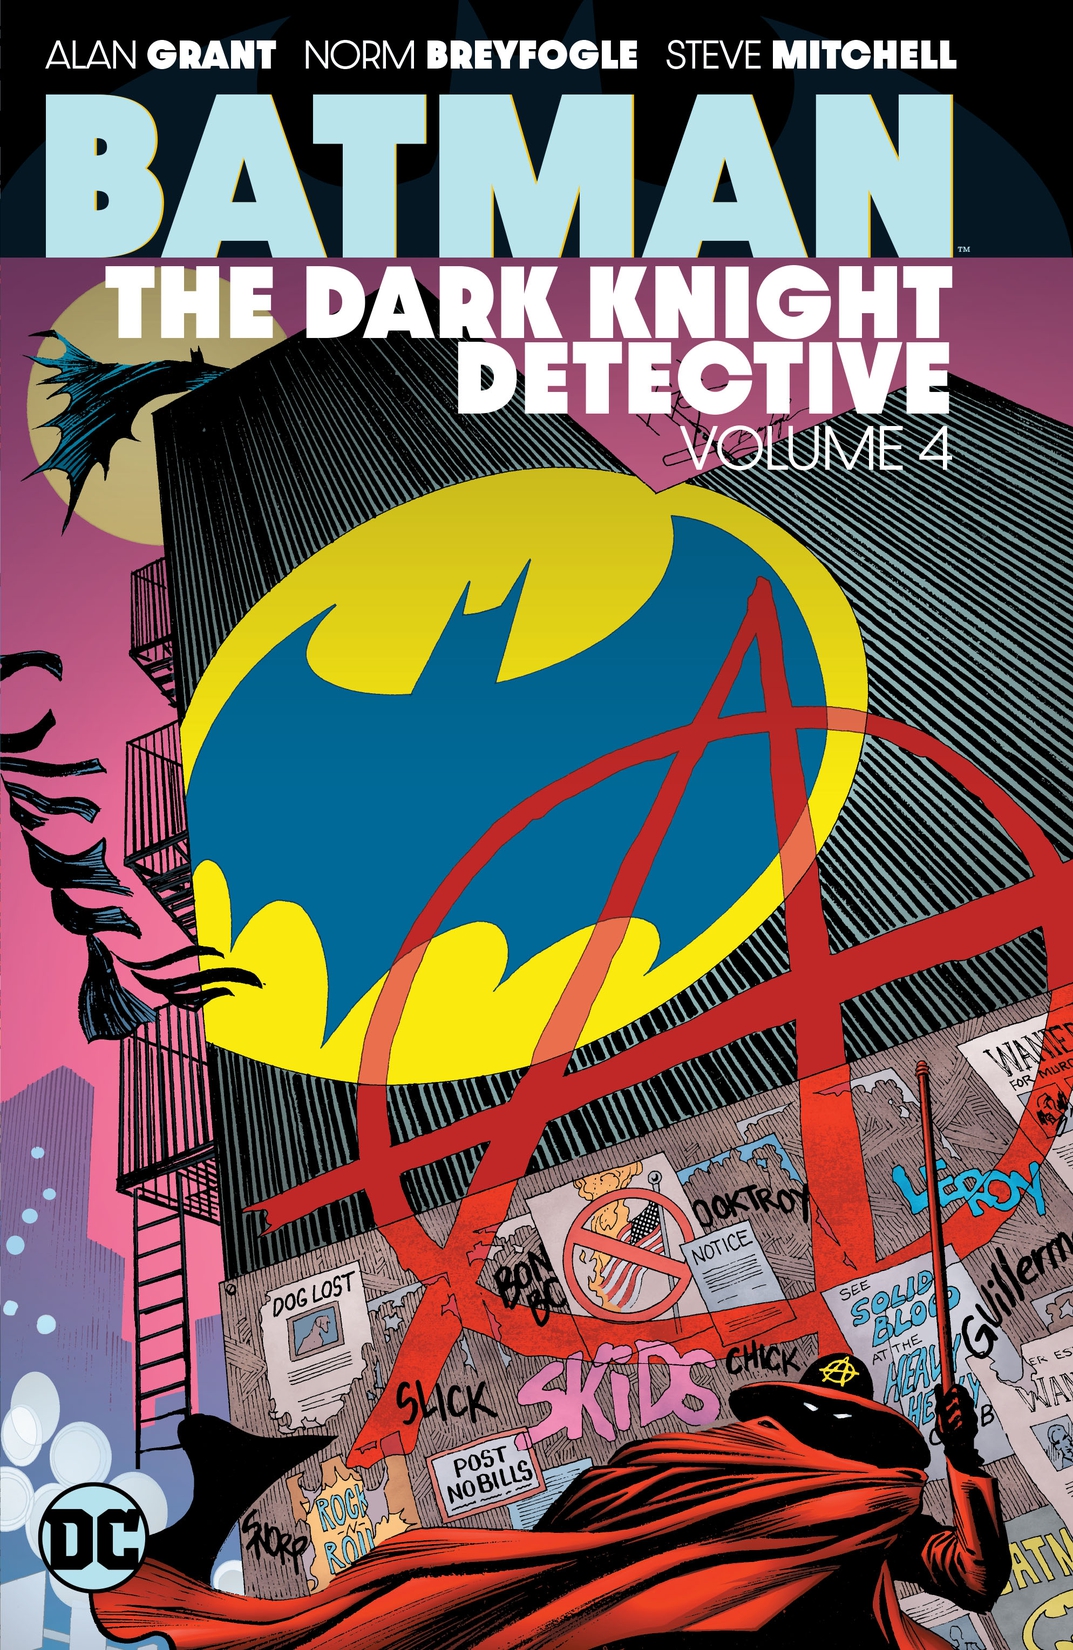 Batman: The Dark Knight Detective Vol. 4 preview images